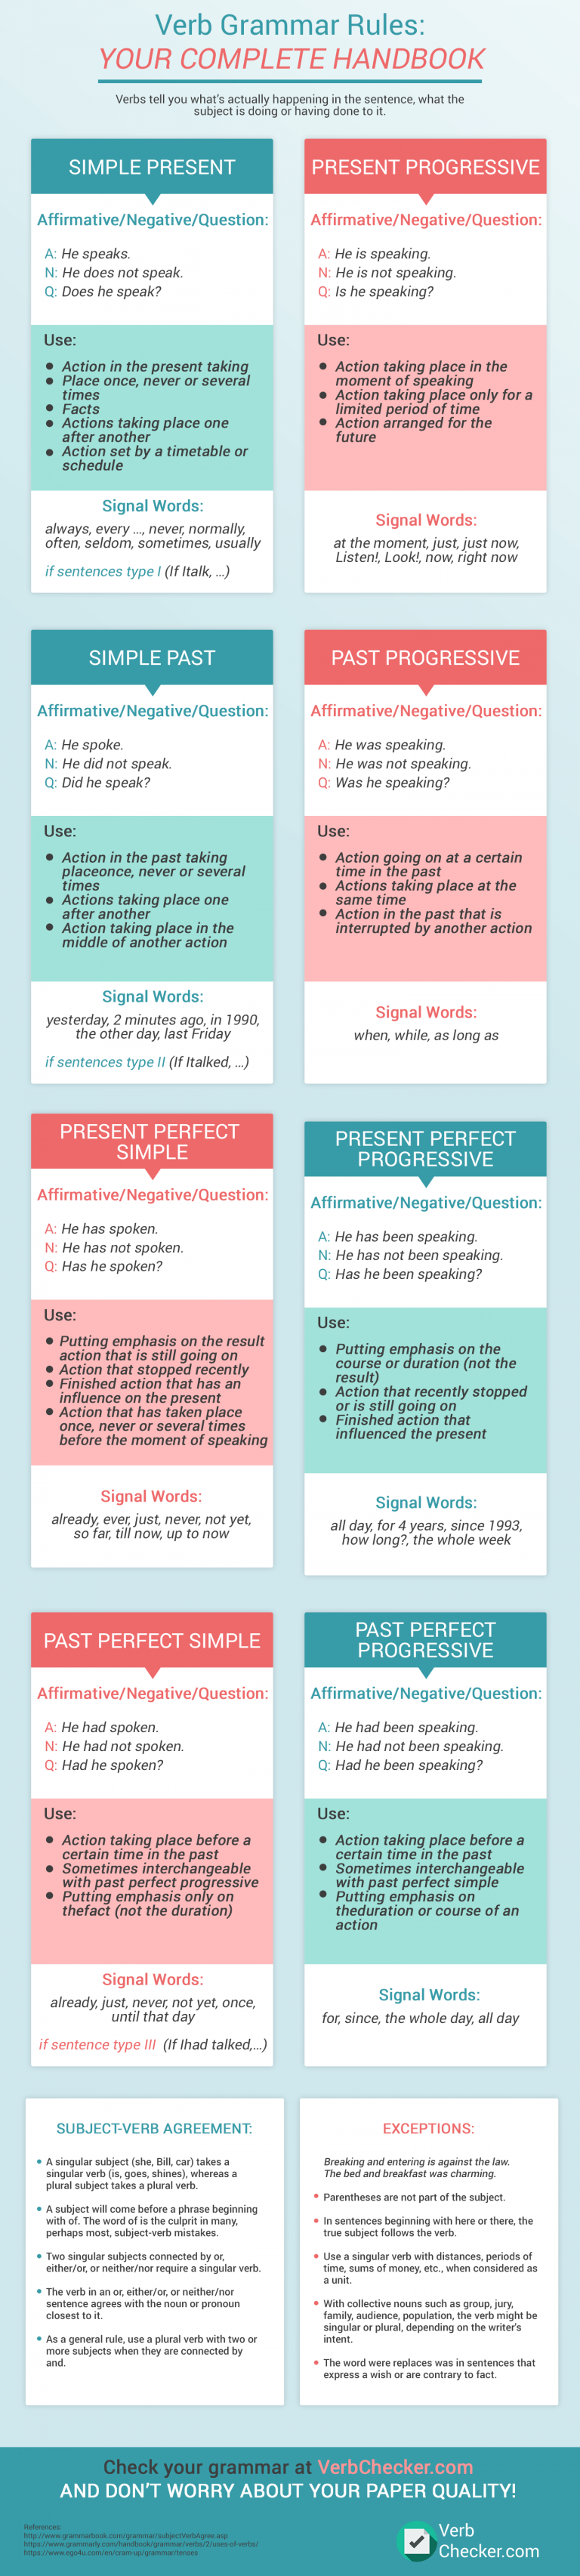 Verb Grammar Rules Your Complete Handbook Infographic Portal